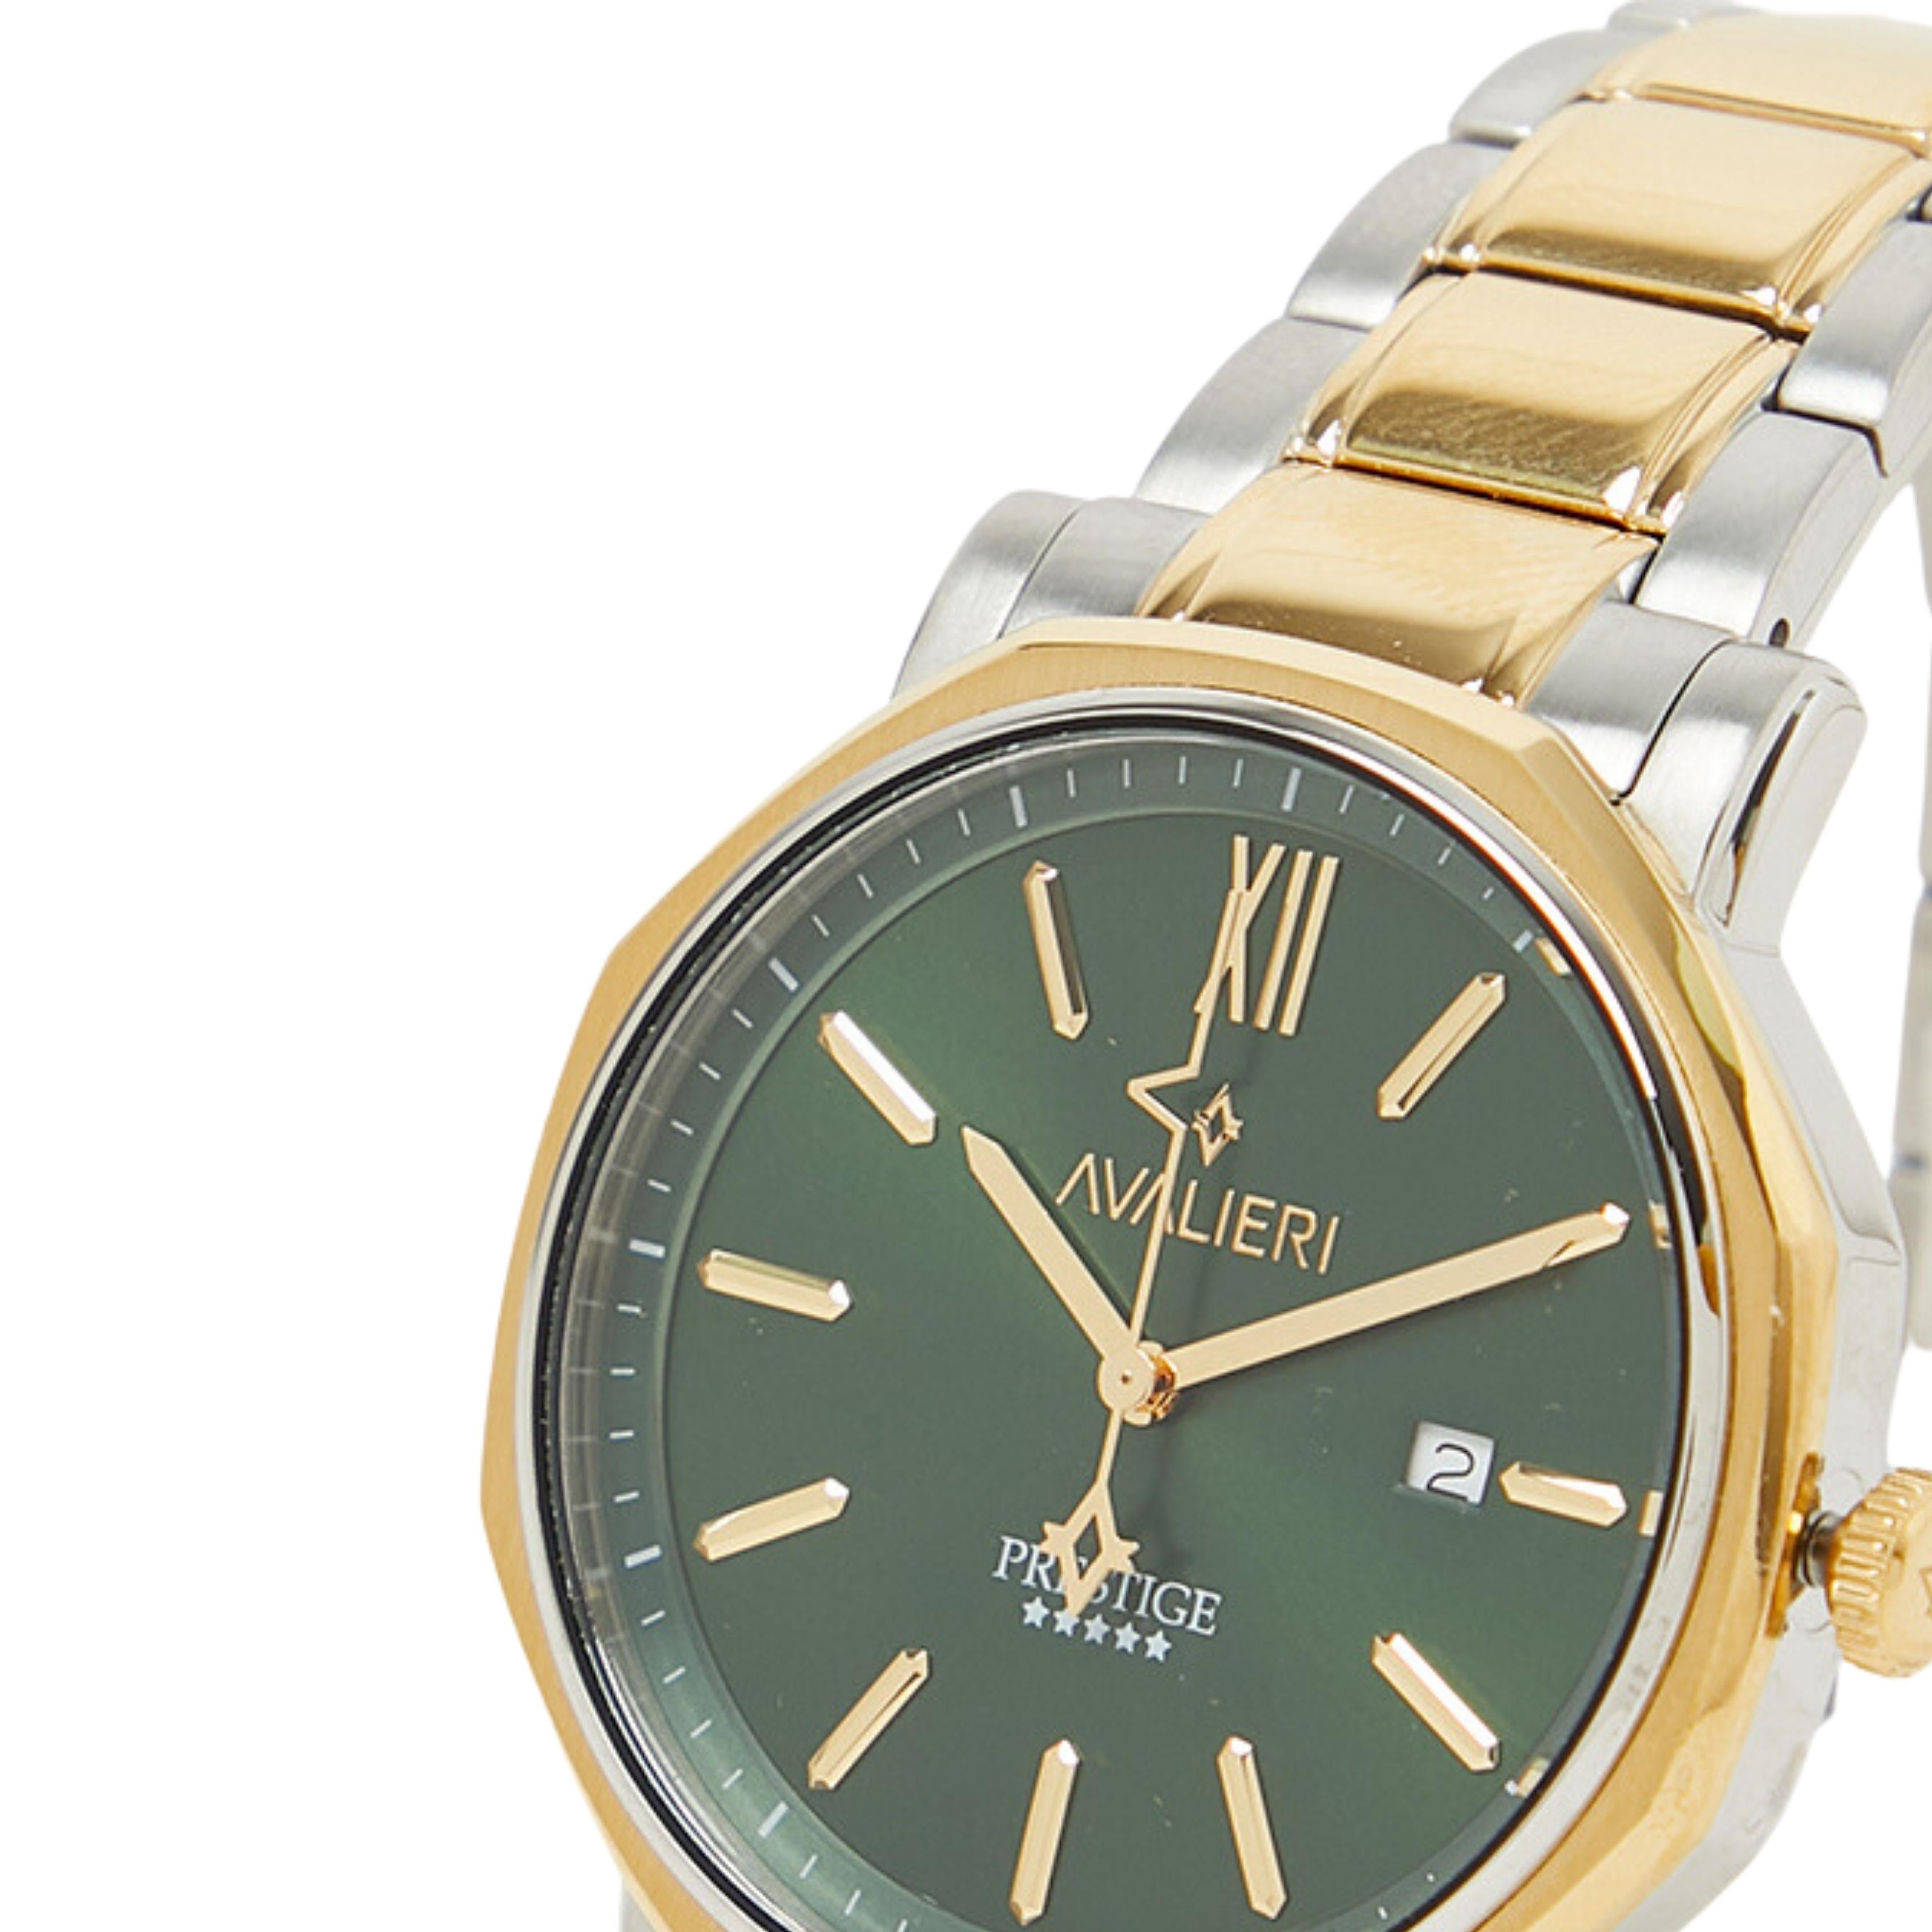 Avalieri Prestige Men's Quartz Green Dial Watch - AP-0145